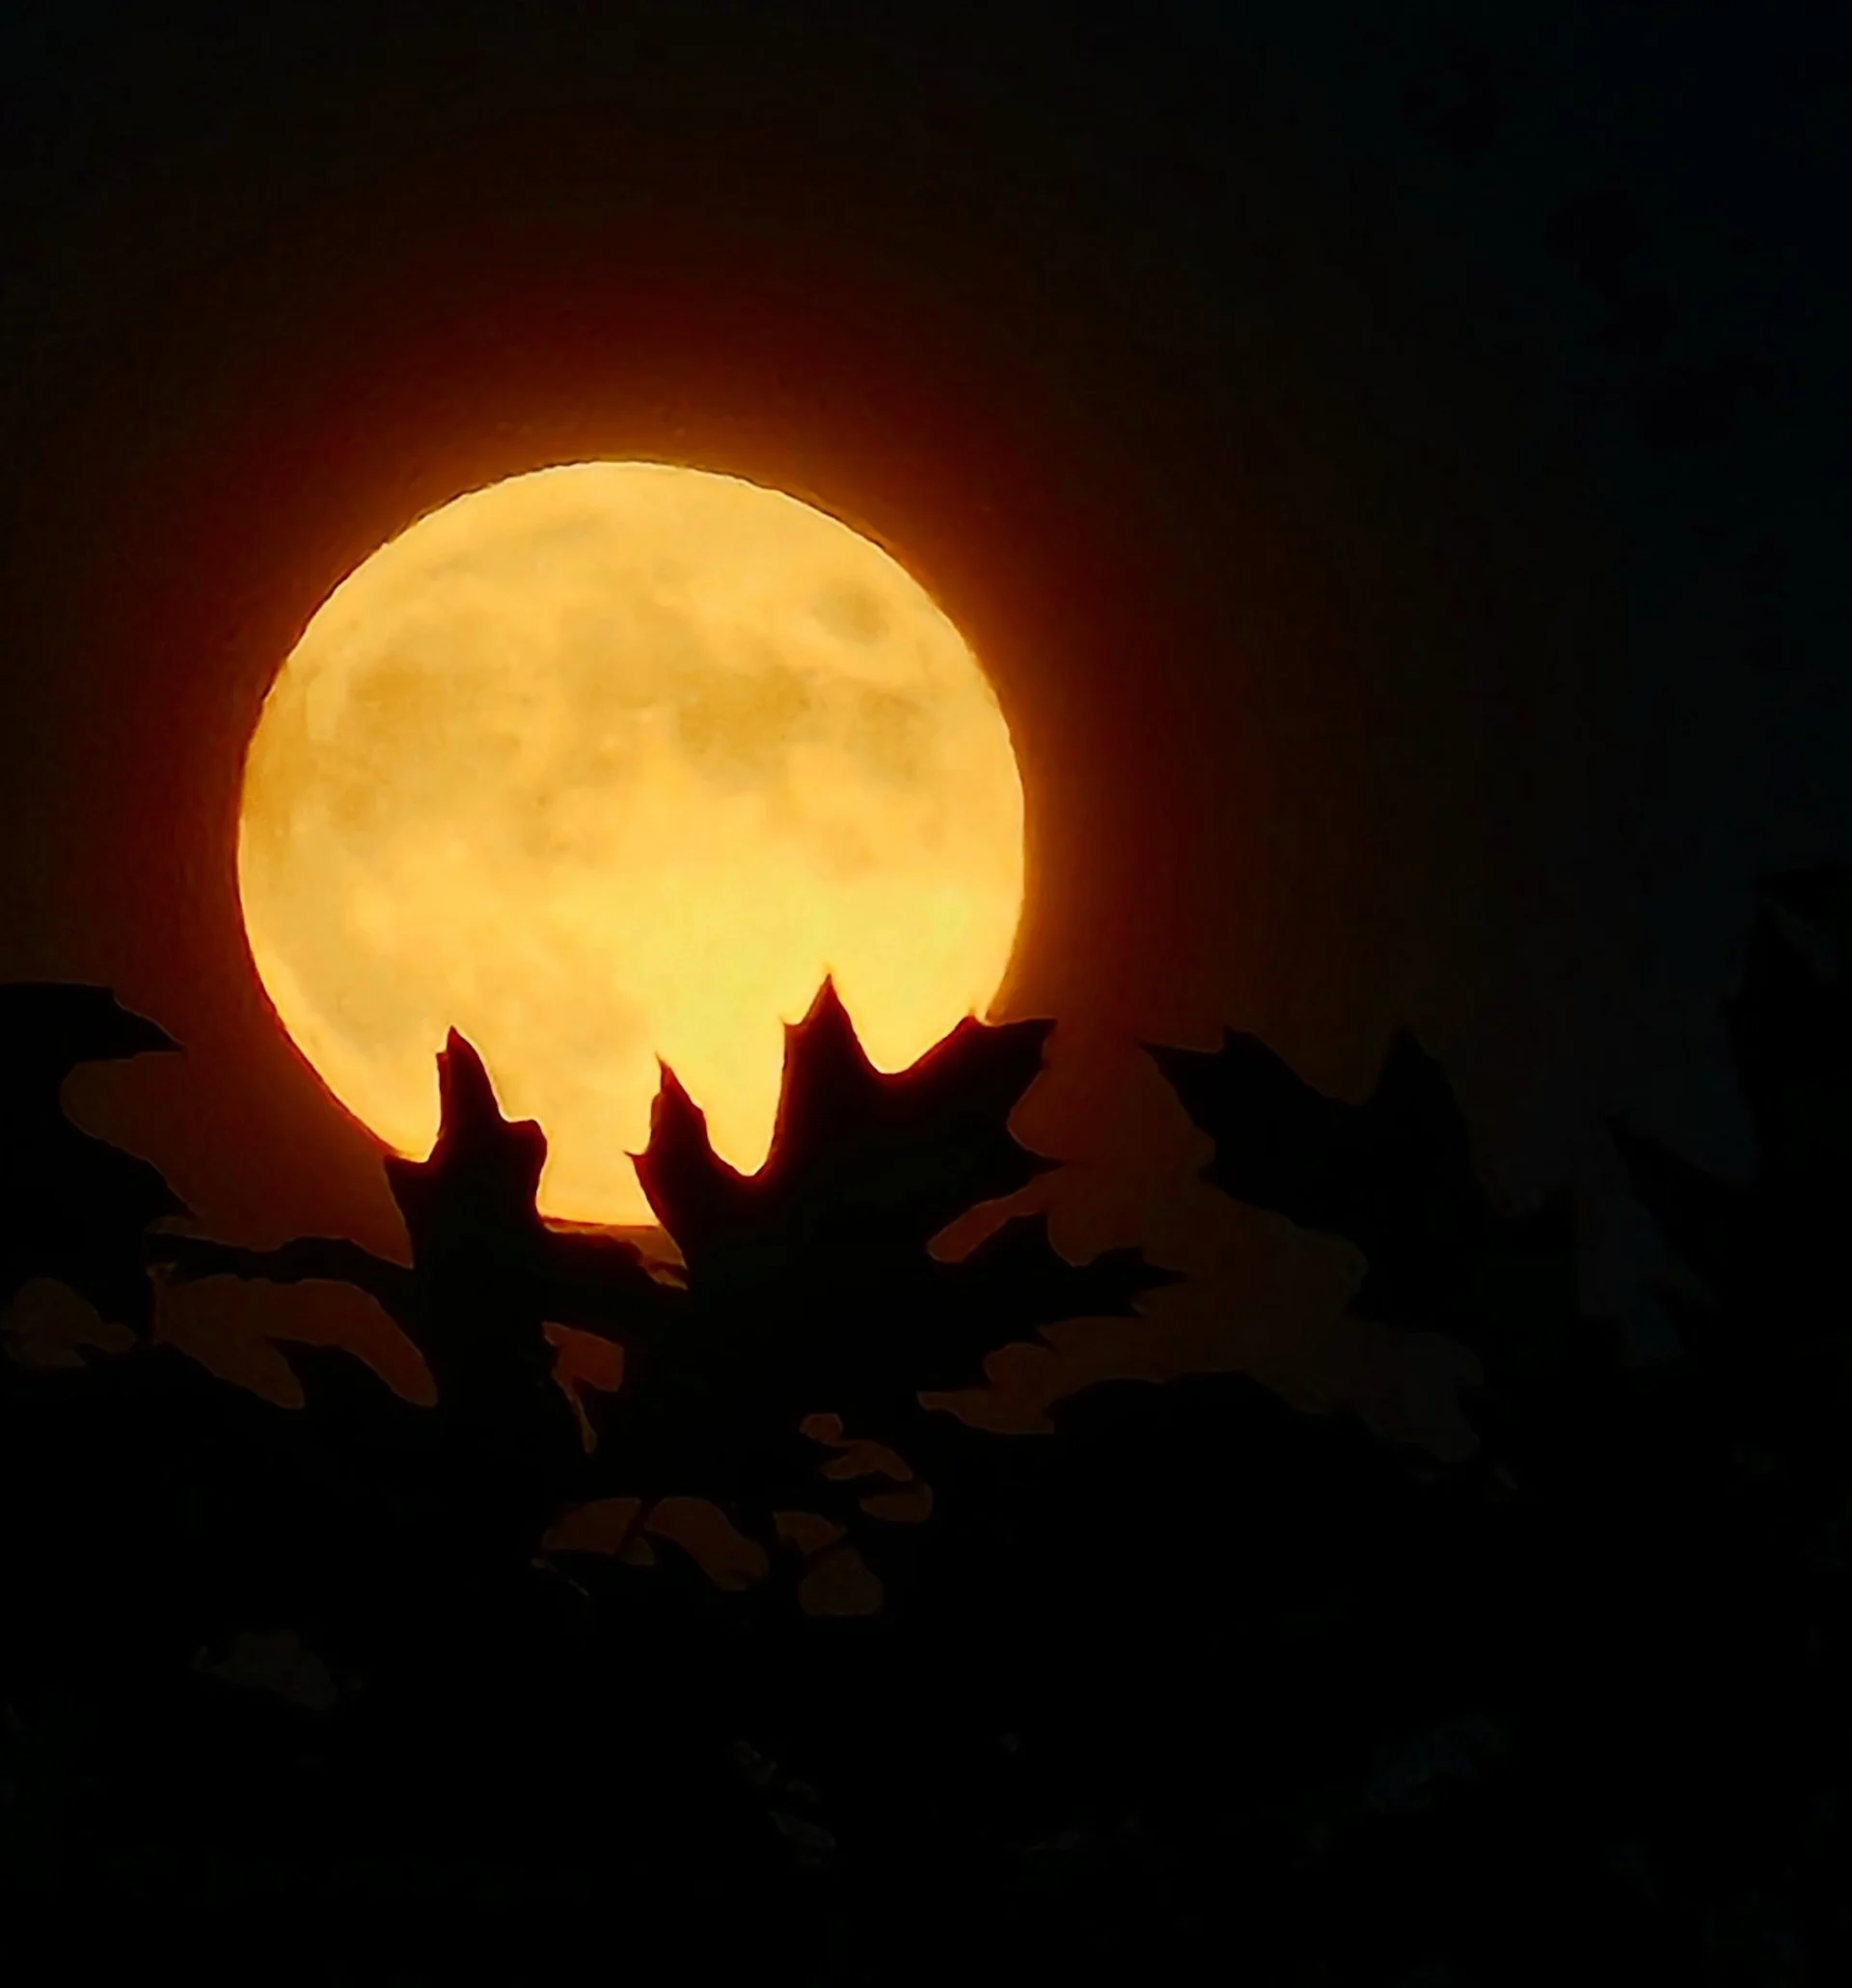 PHOTOS: Full hunter's moon illuminates the sky, delights viewers